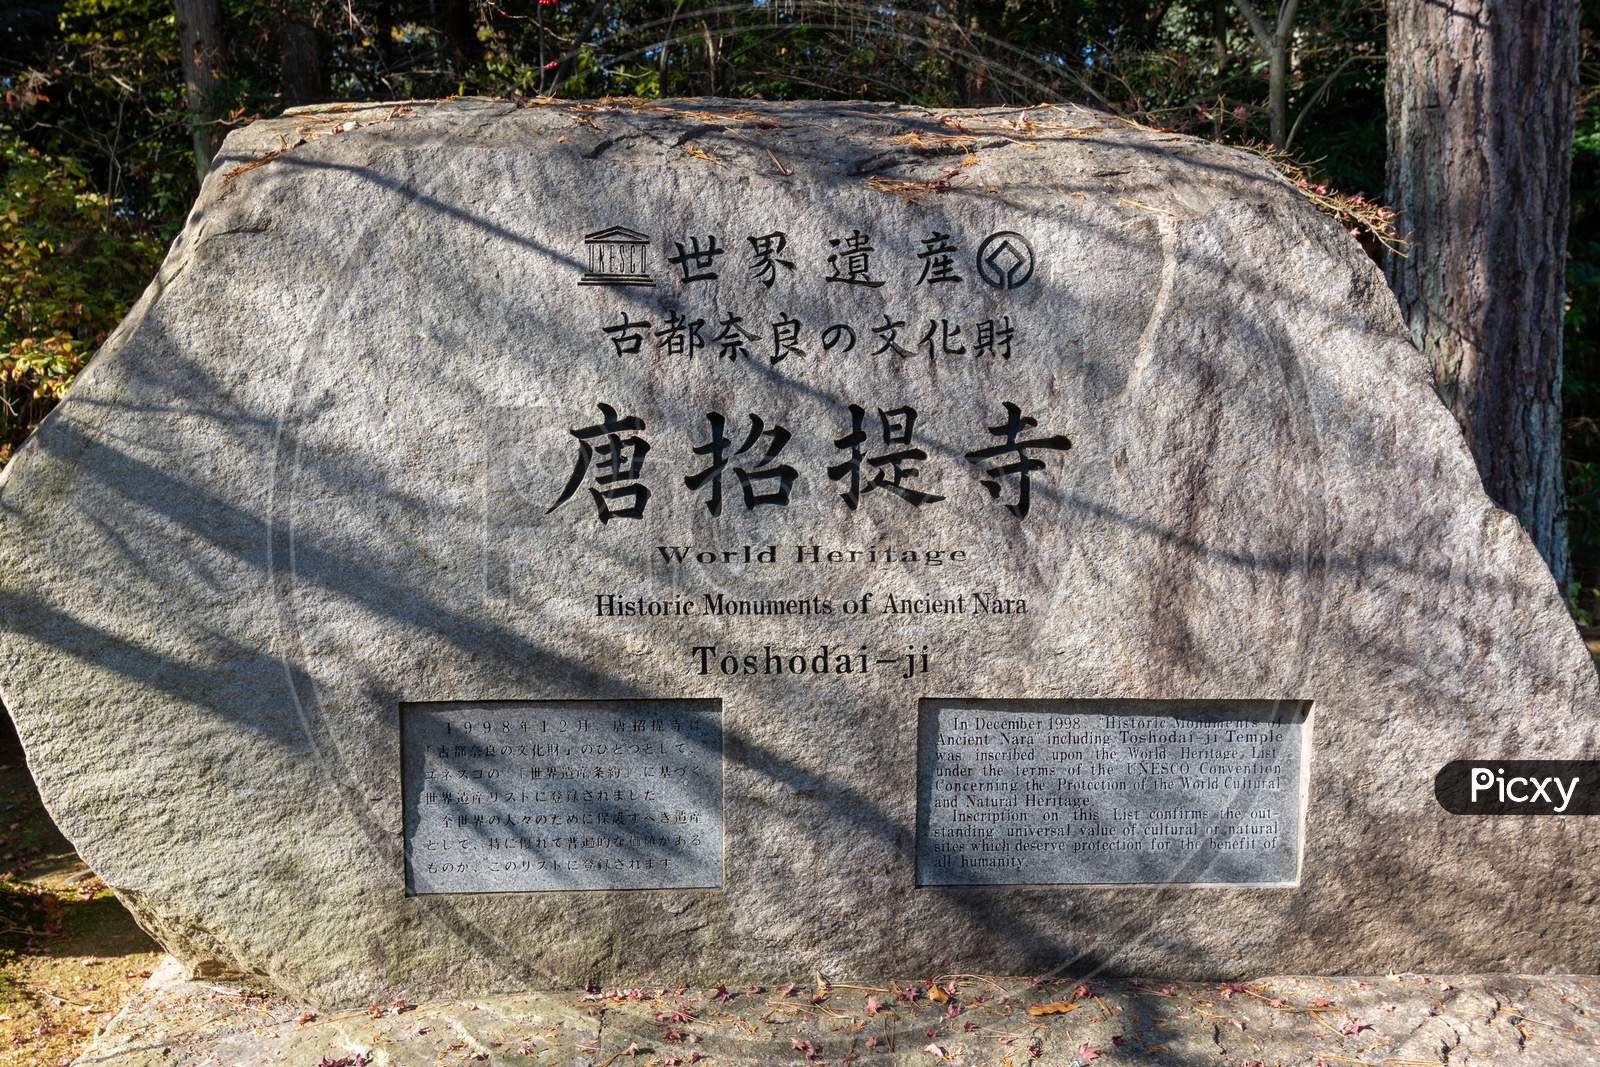 Stone Marking The Entrance At Toshodai-Ji Buddhist Temple In Nara, Japan